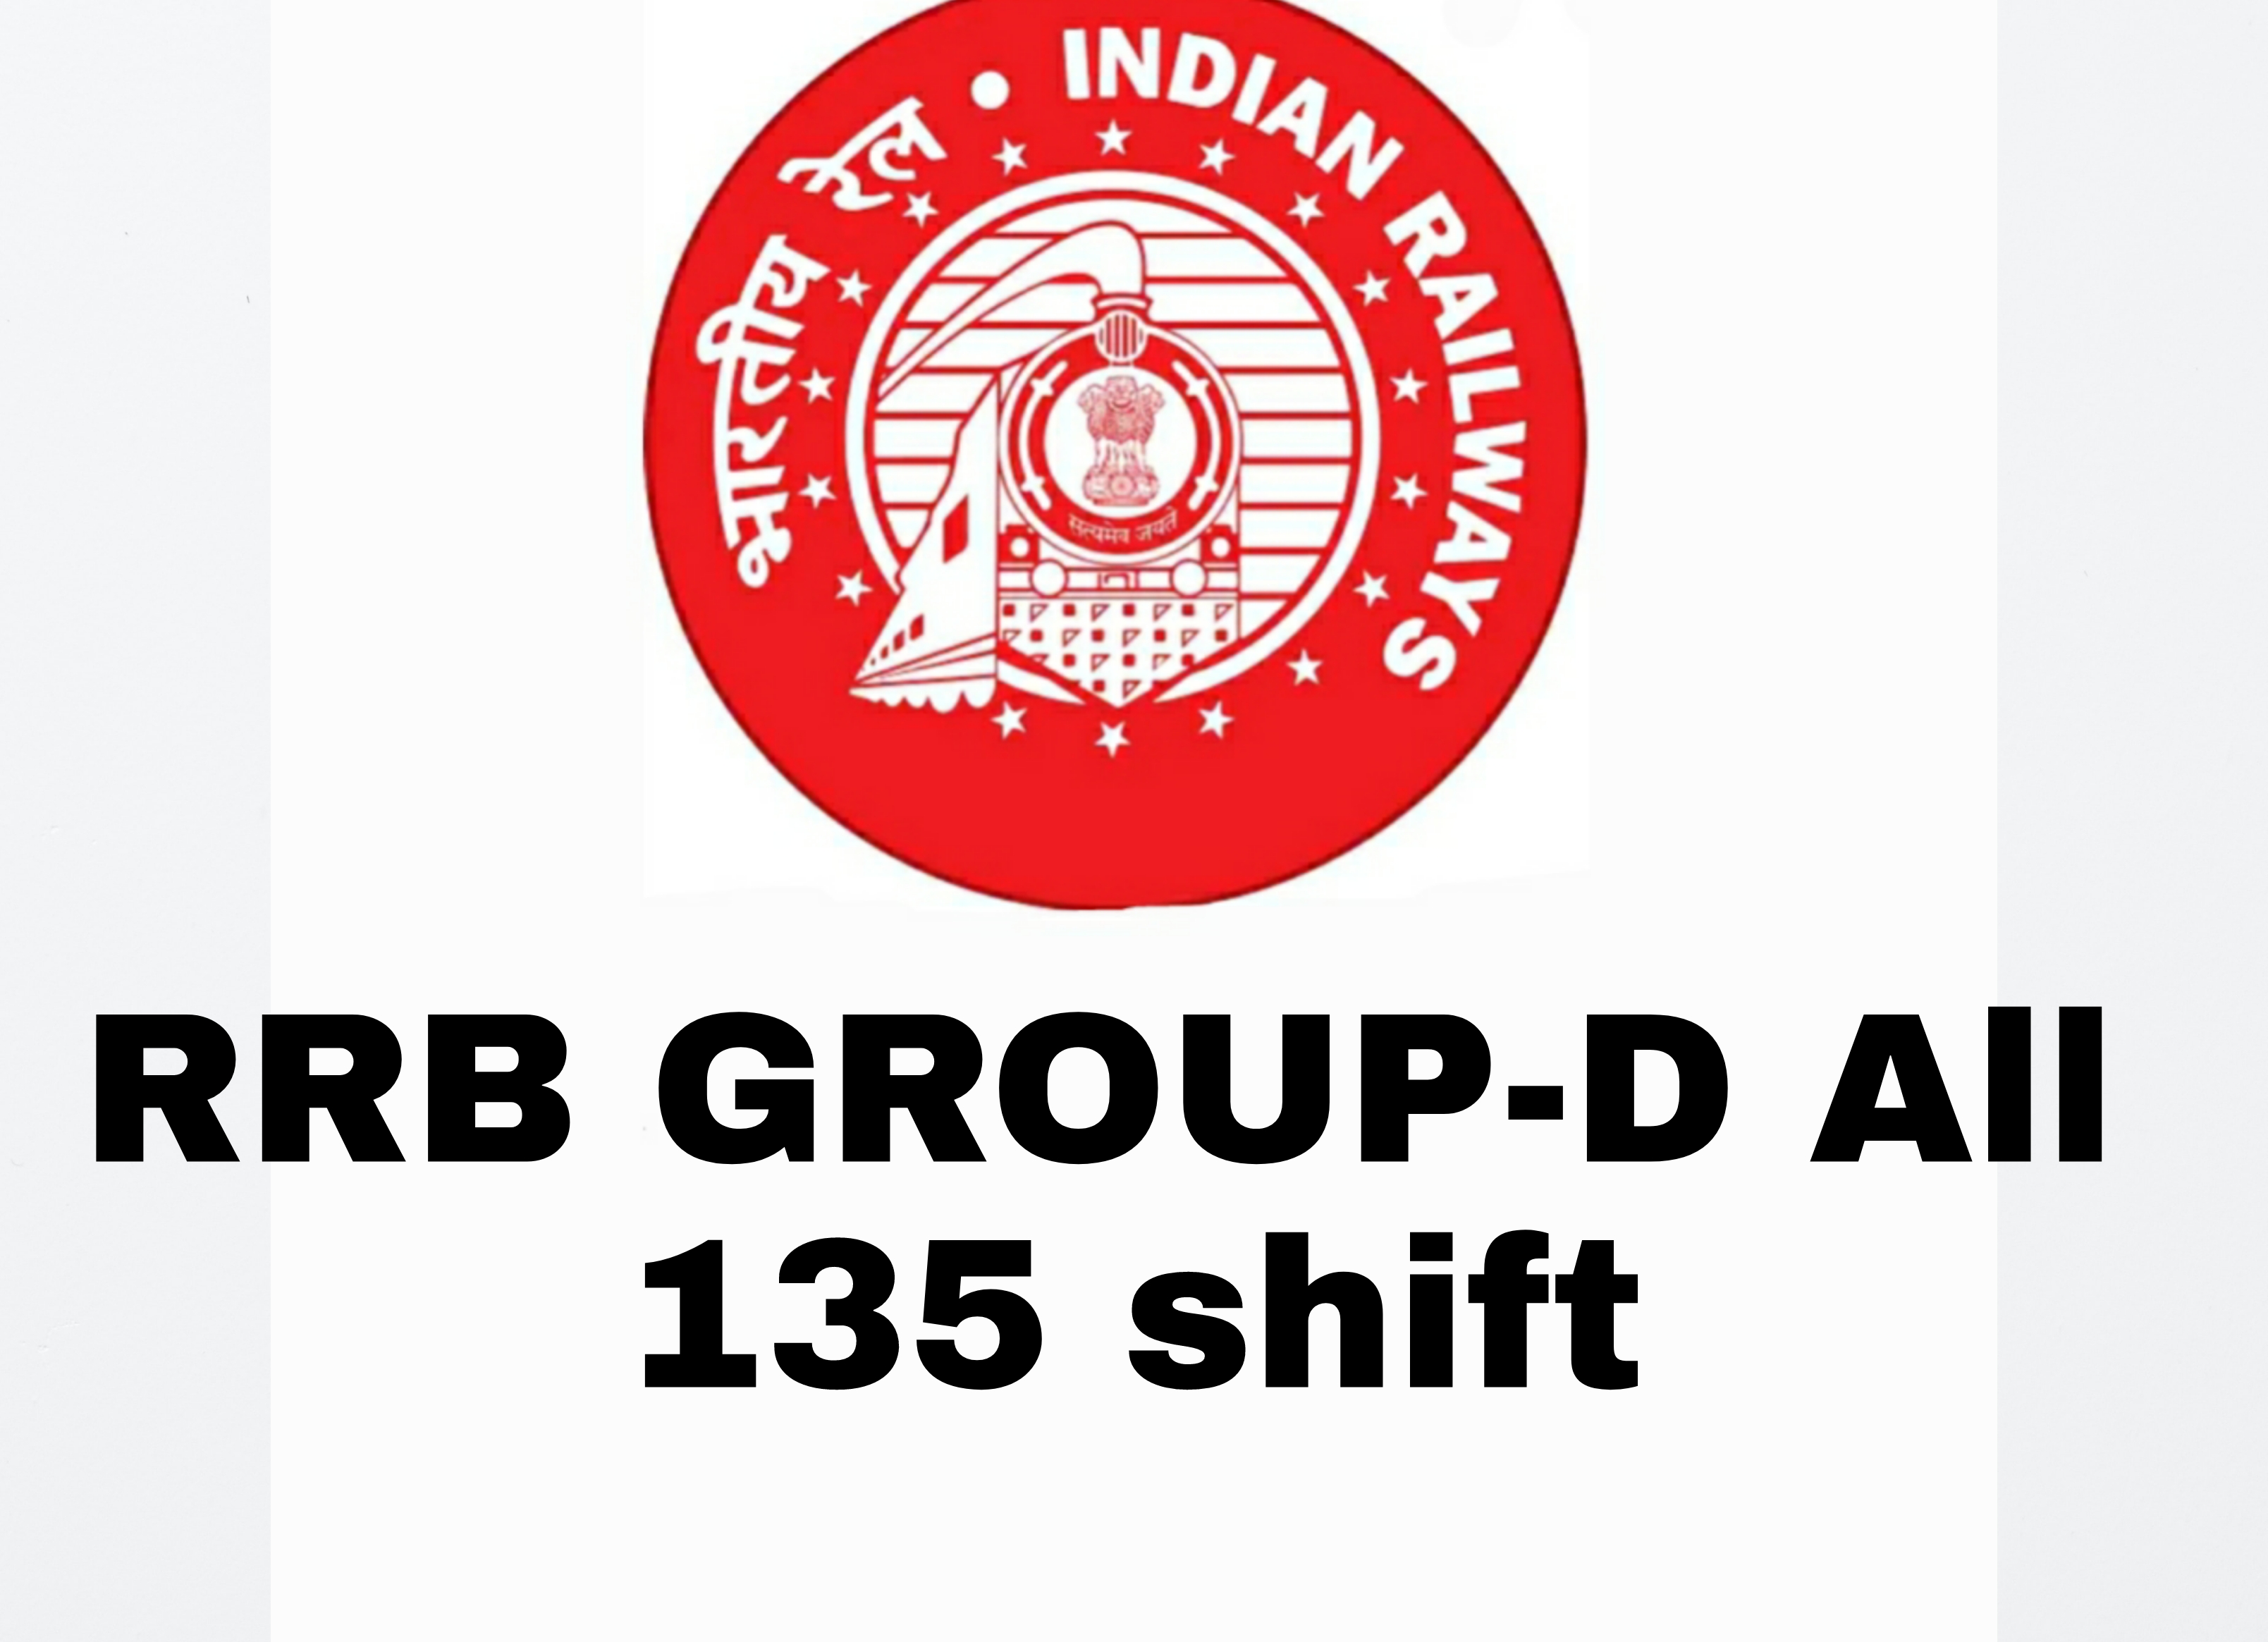 RRB GROUP D 135 SHIFT questions paper